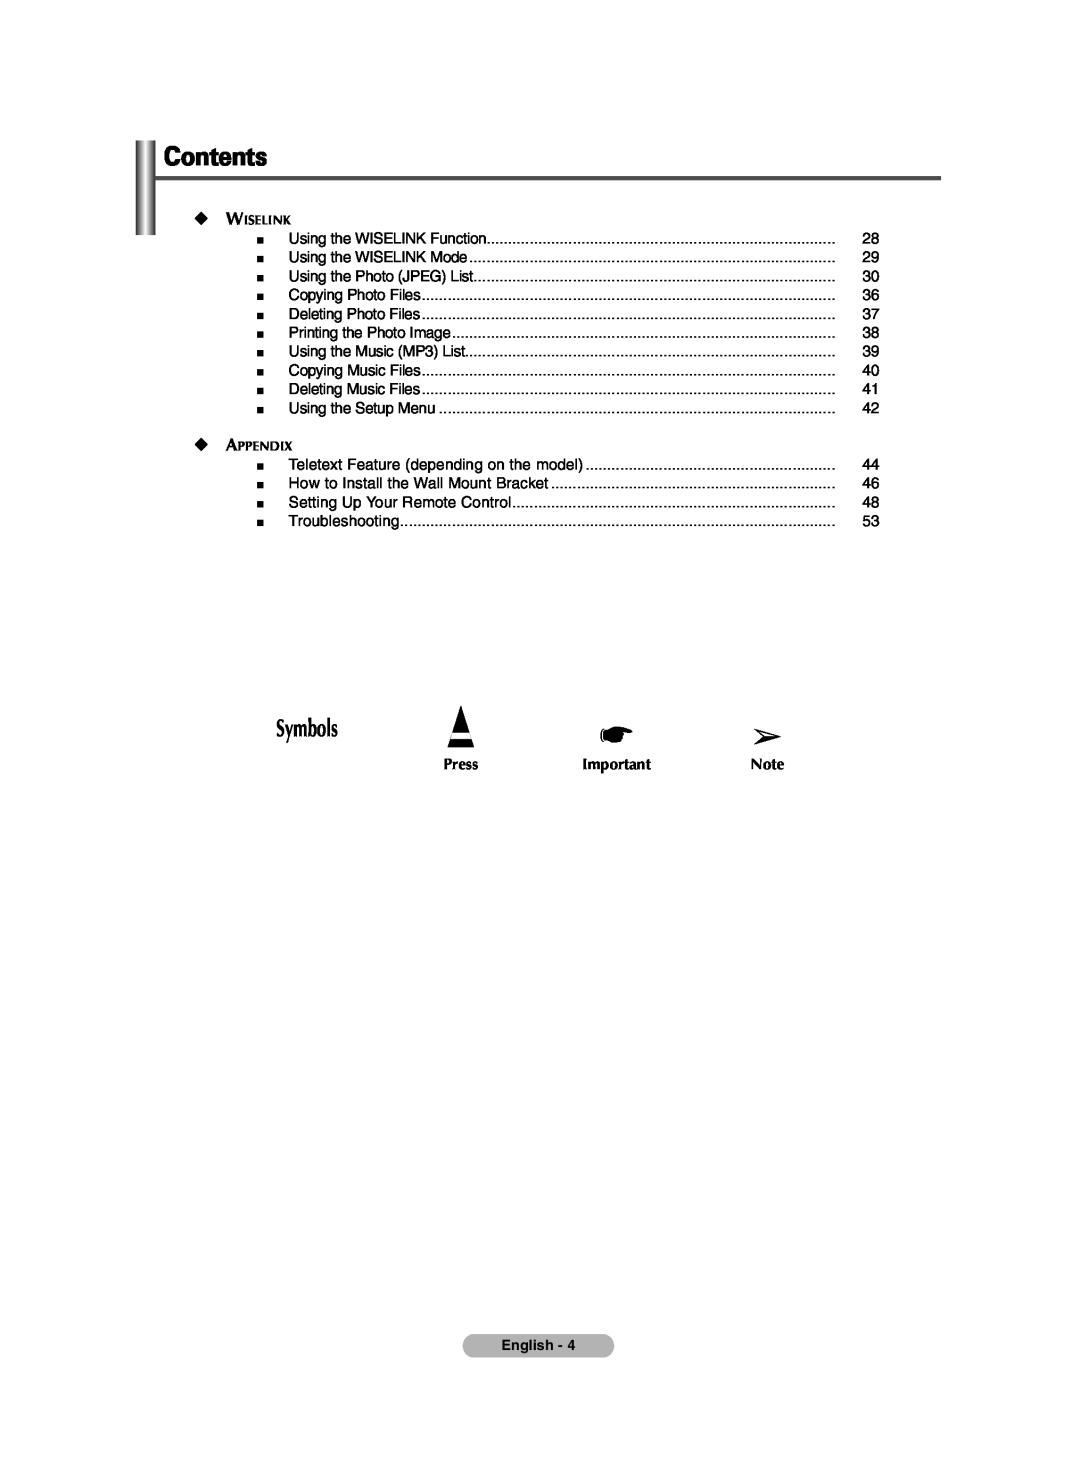 Samsung PDP-TELEVISION manual Press, Contents, Symbols, Wiselink, Appendix 